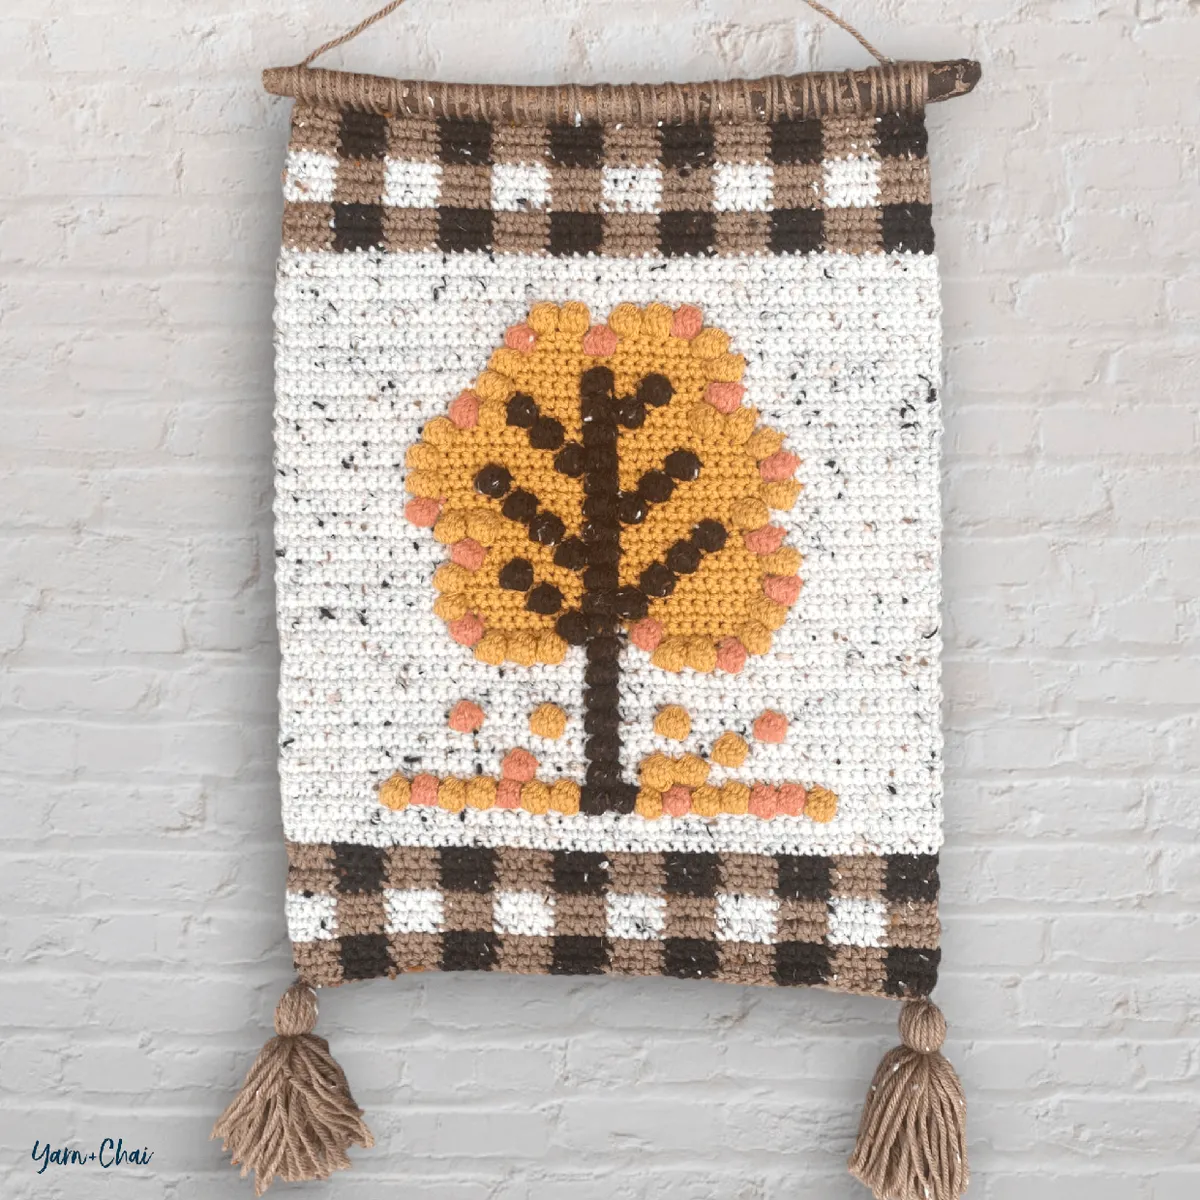 The Perfect Fall Free Crochet Patterns for Autumn - OkieGirlBling'n'Things